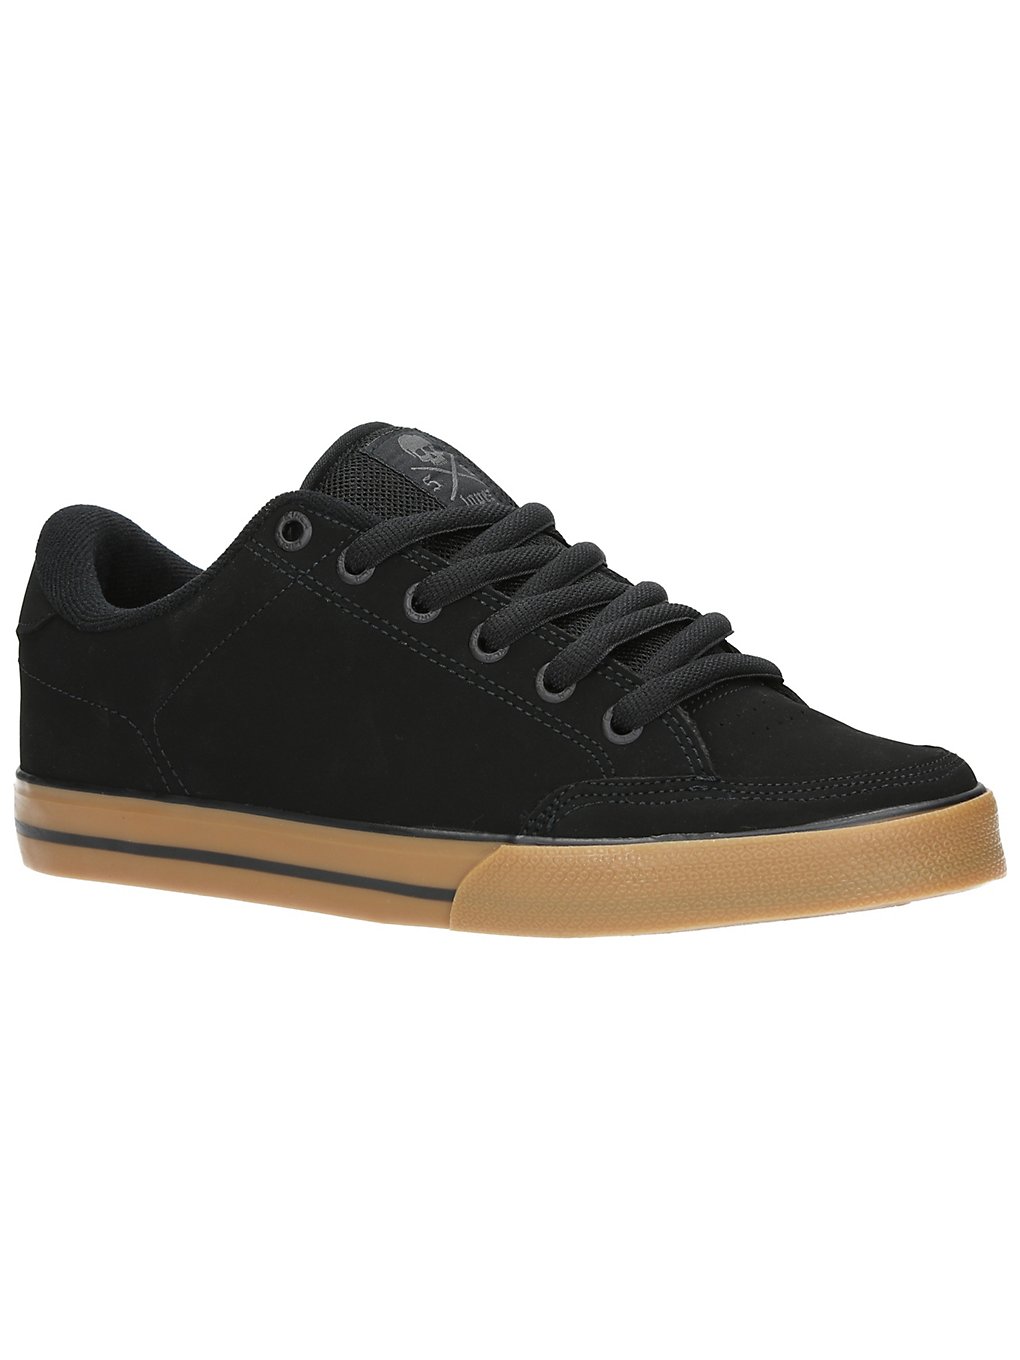 Circa AL 50 Skate Shoes svart